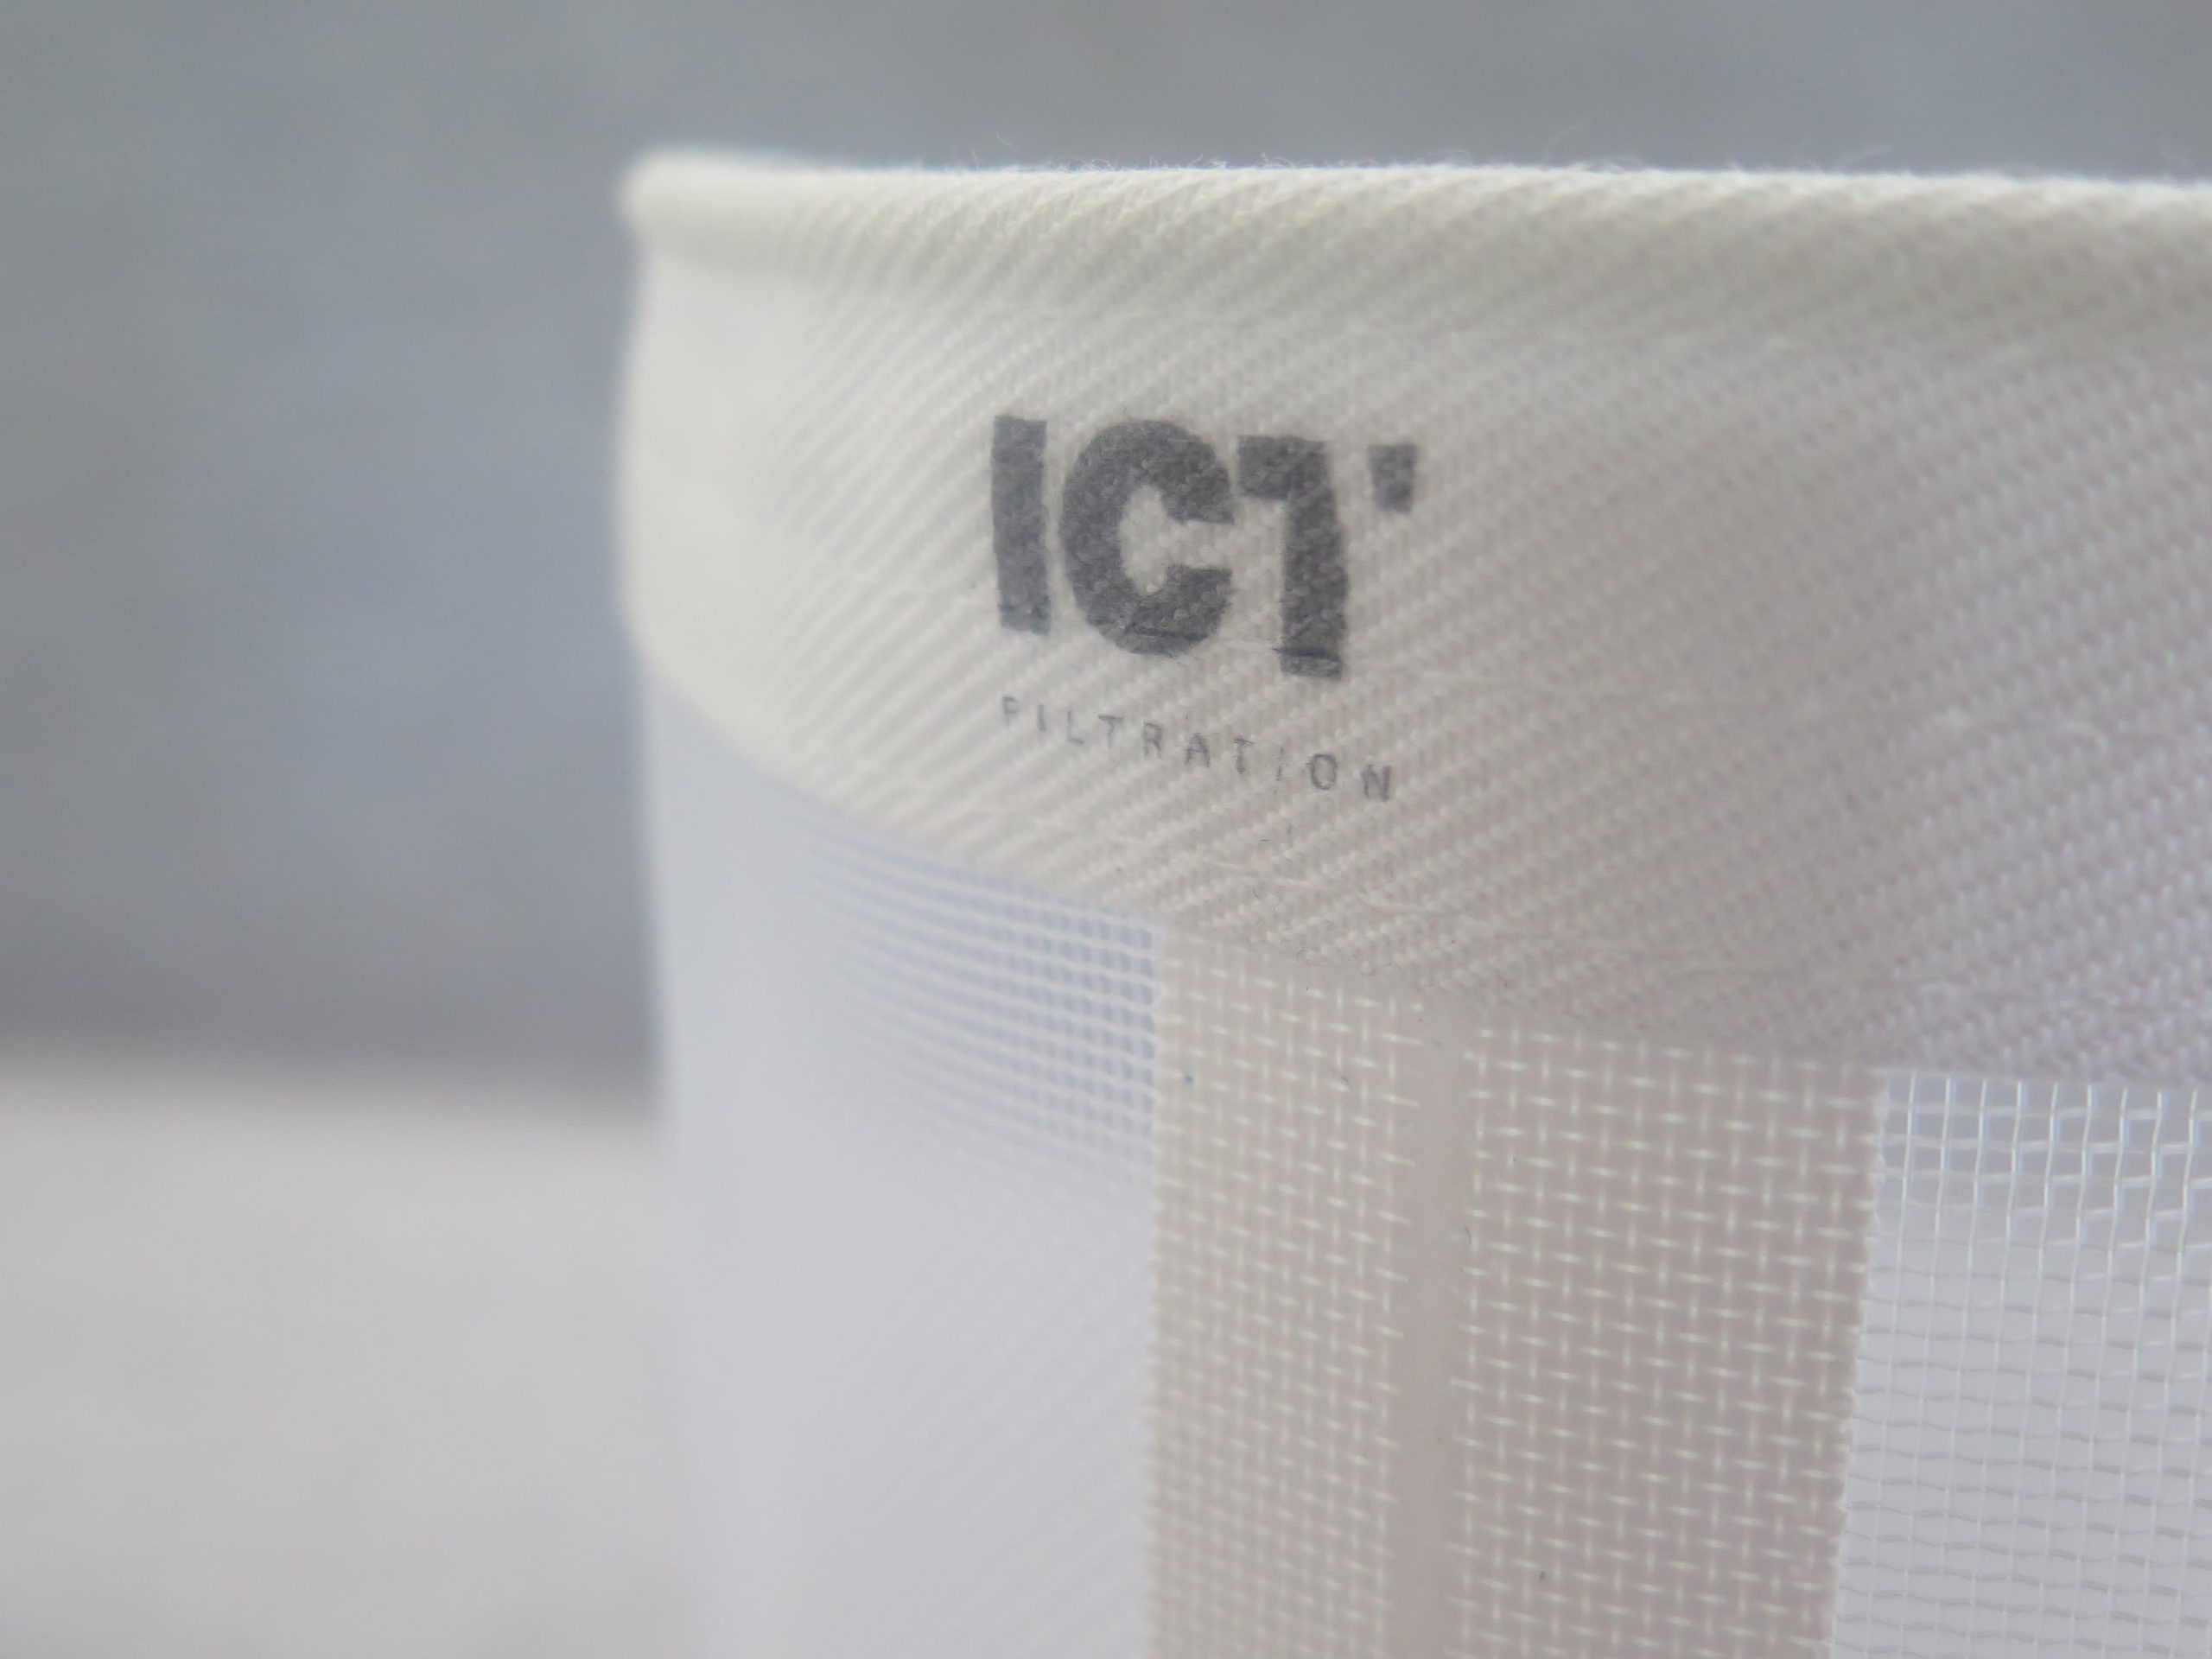 tamices textiles termosellados ICT FILTRATION